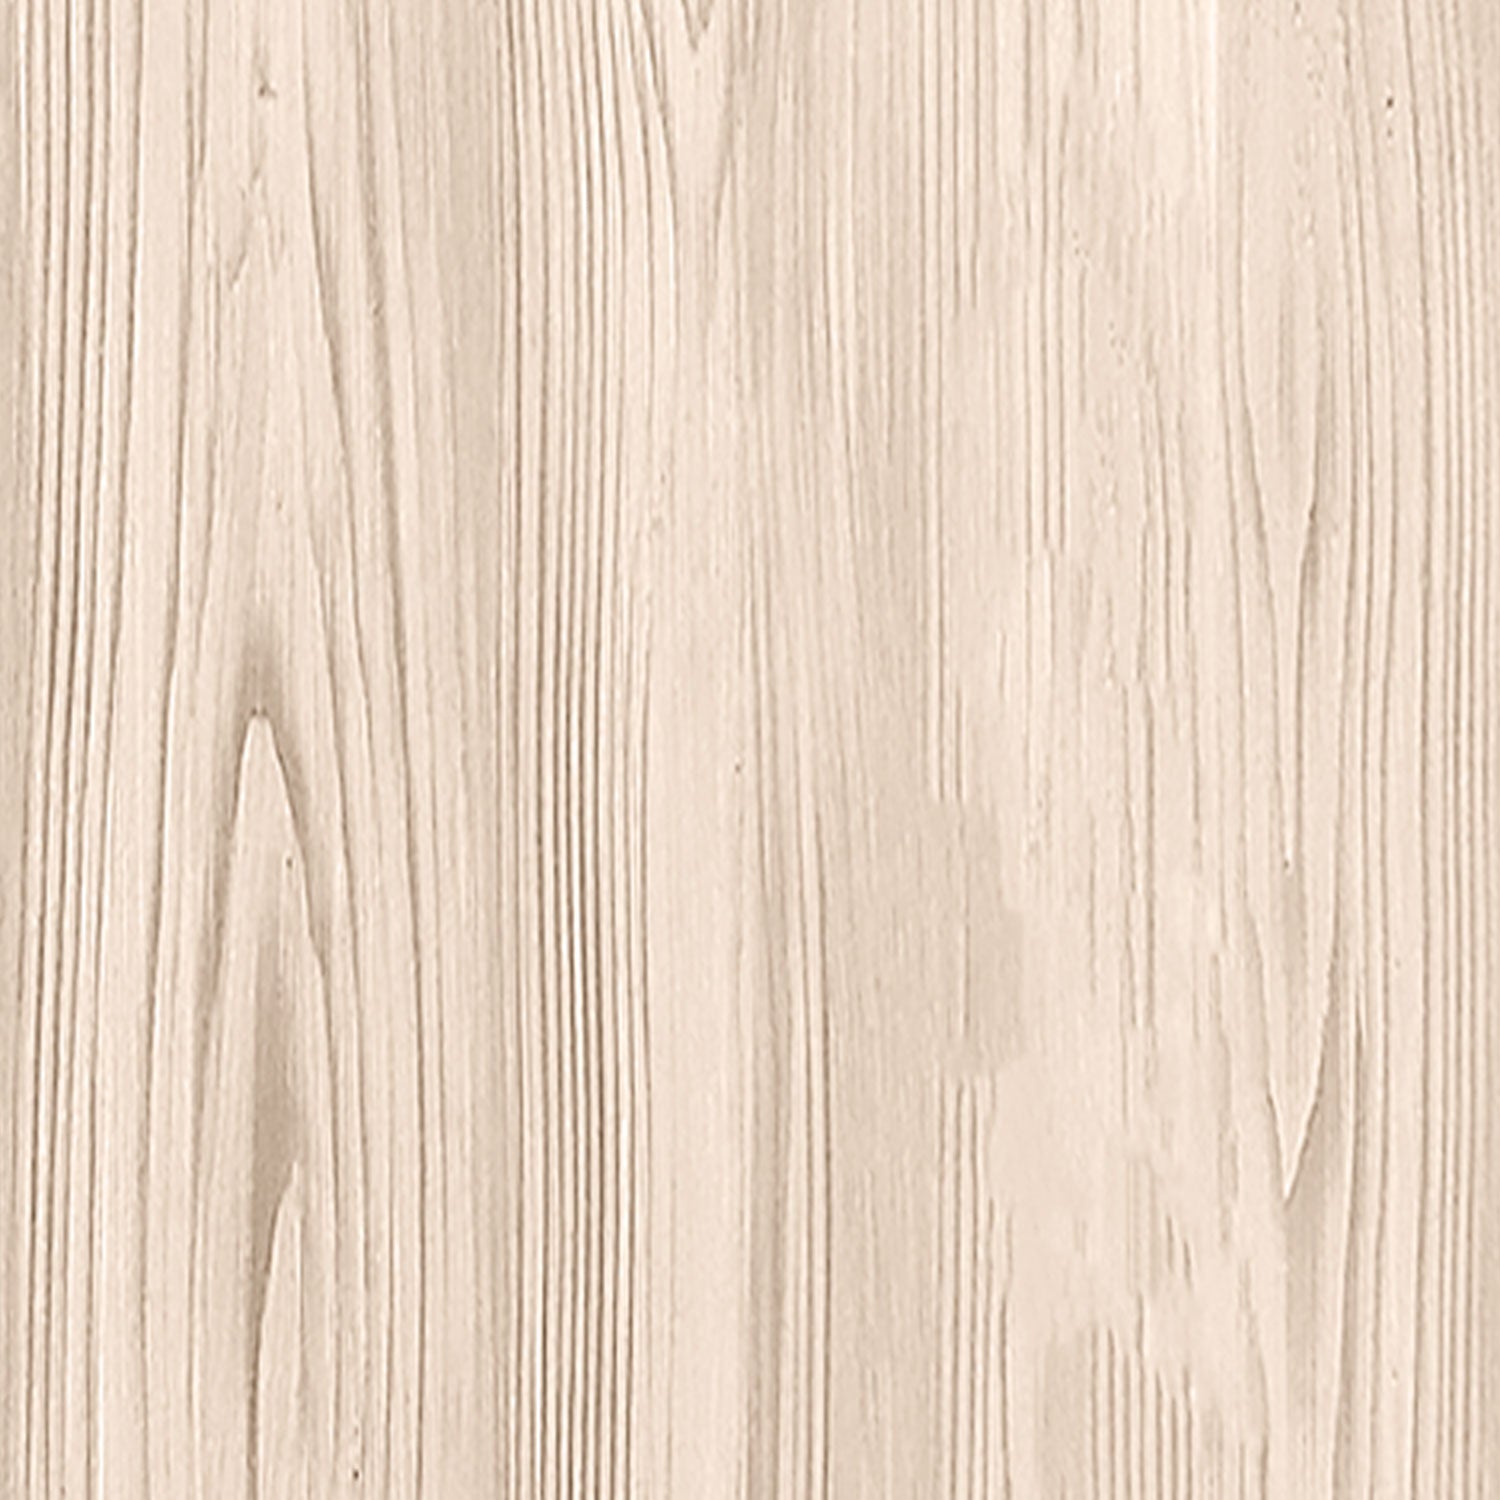 Multi-purpose Wood'n Kit - White Oak